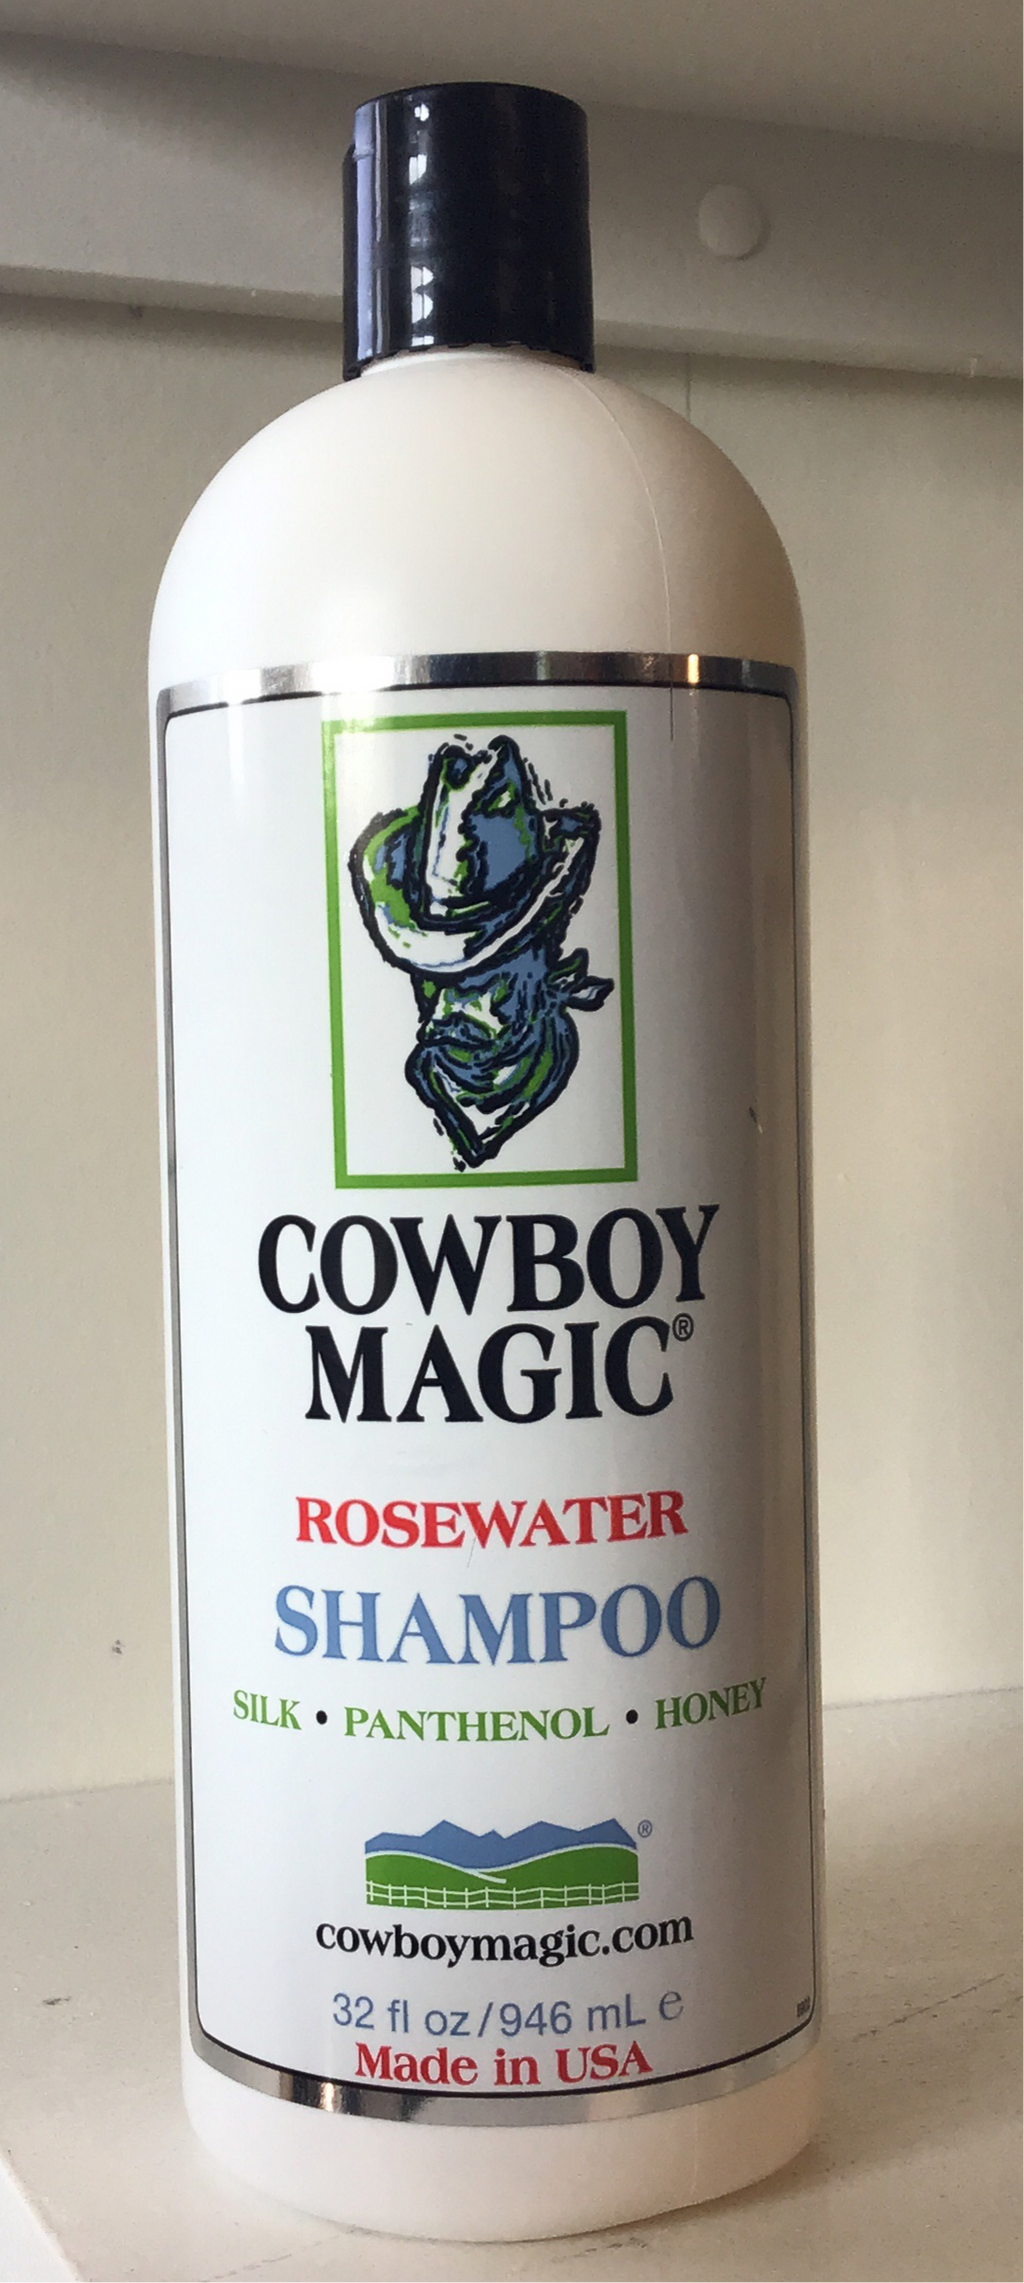 Cowboy magic rosewater shampoo 943ml